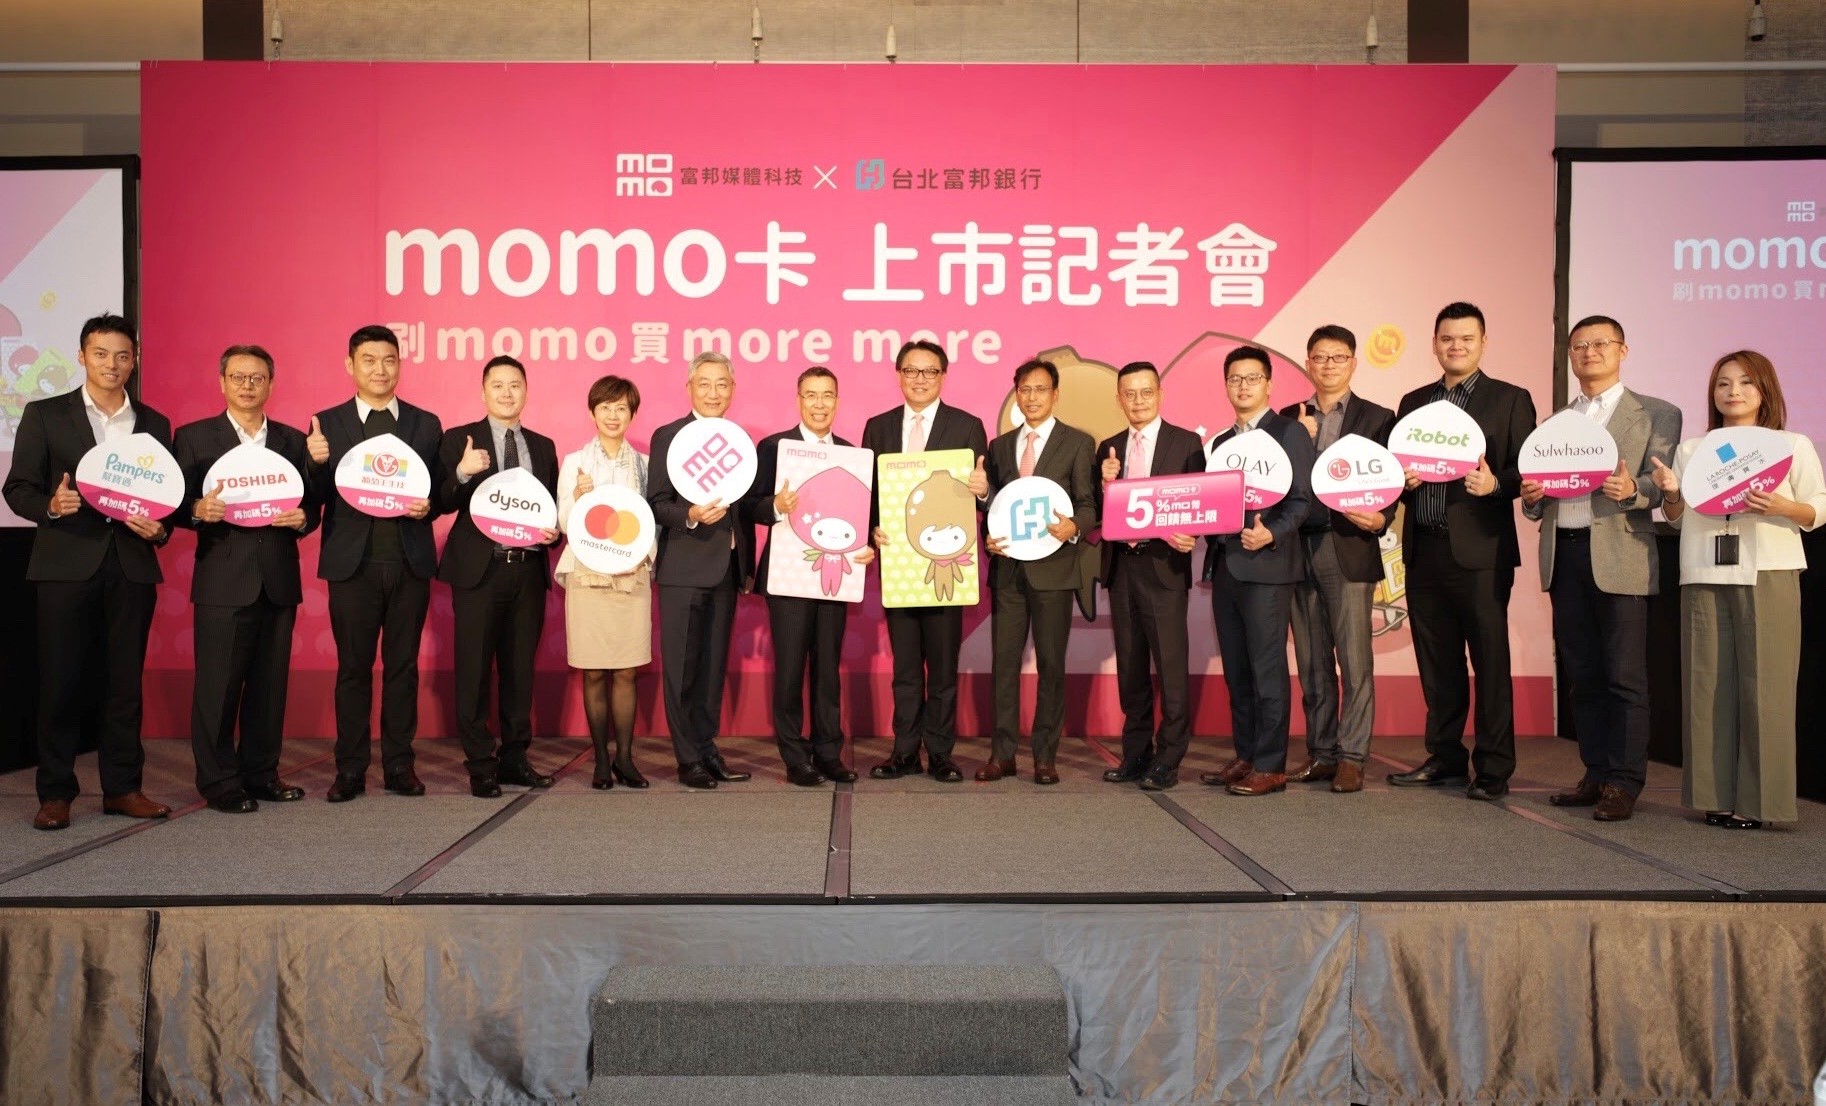 momo攜手台北富邦銀行 打造全台最強網購「momo卡」